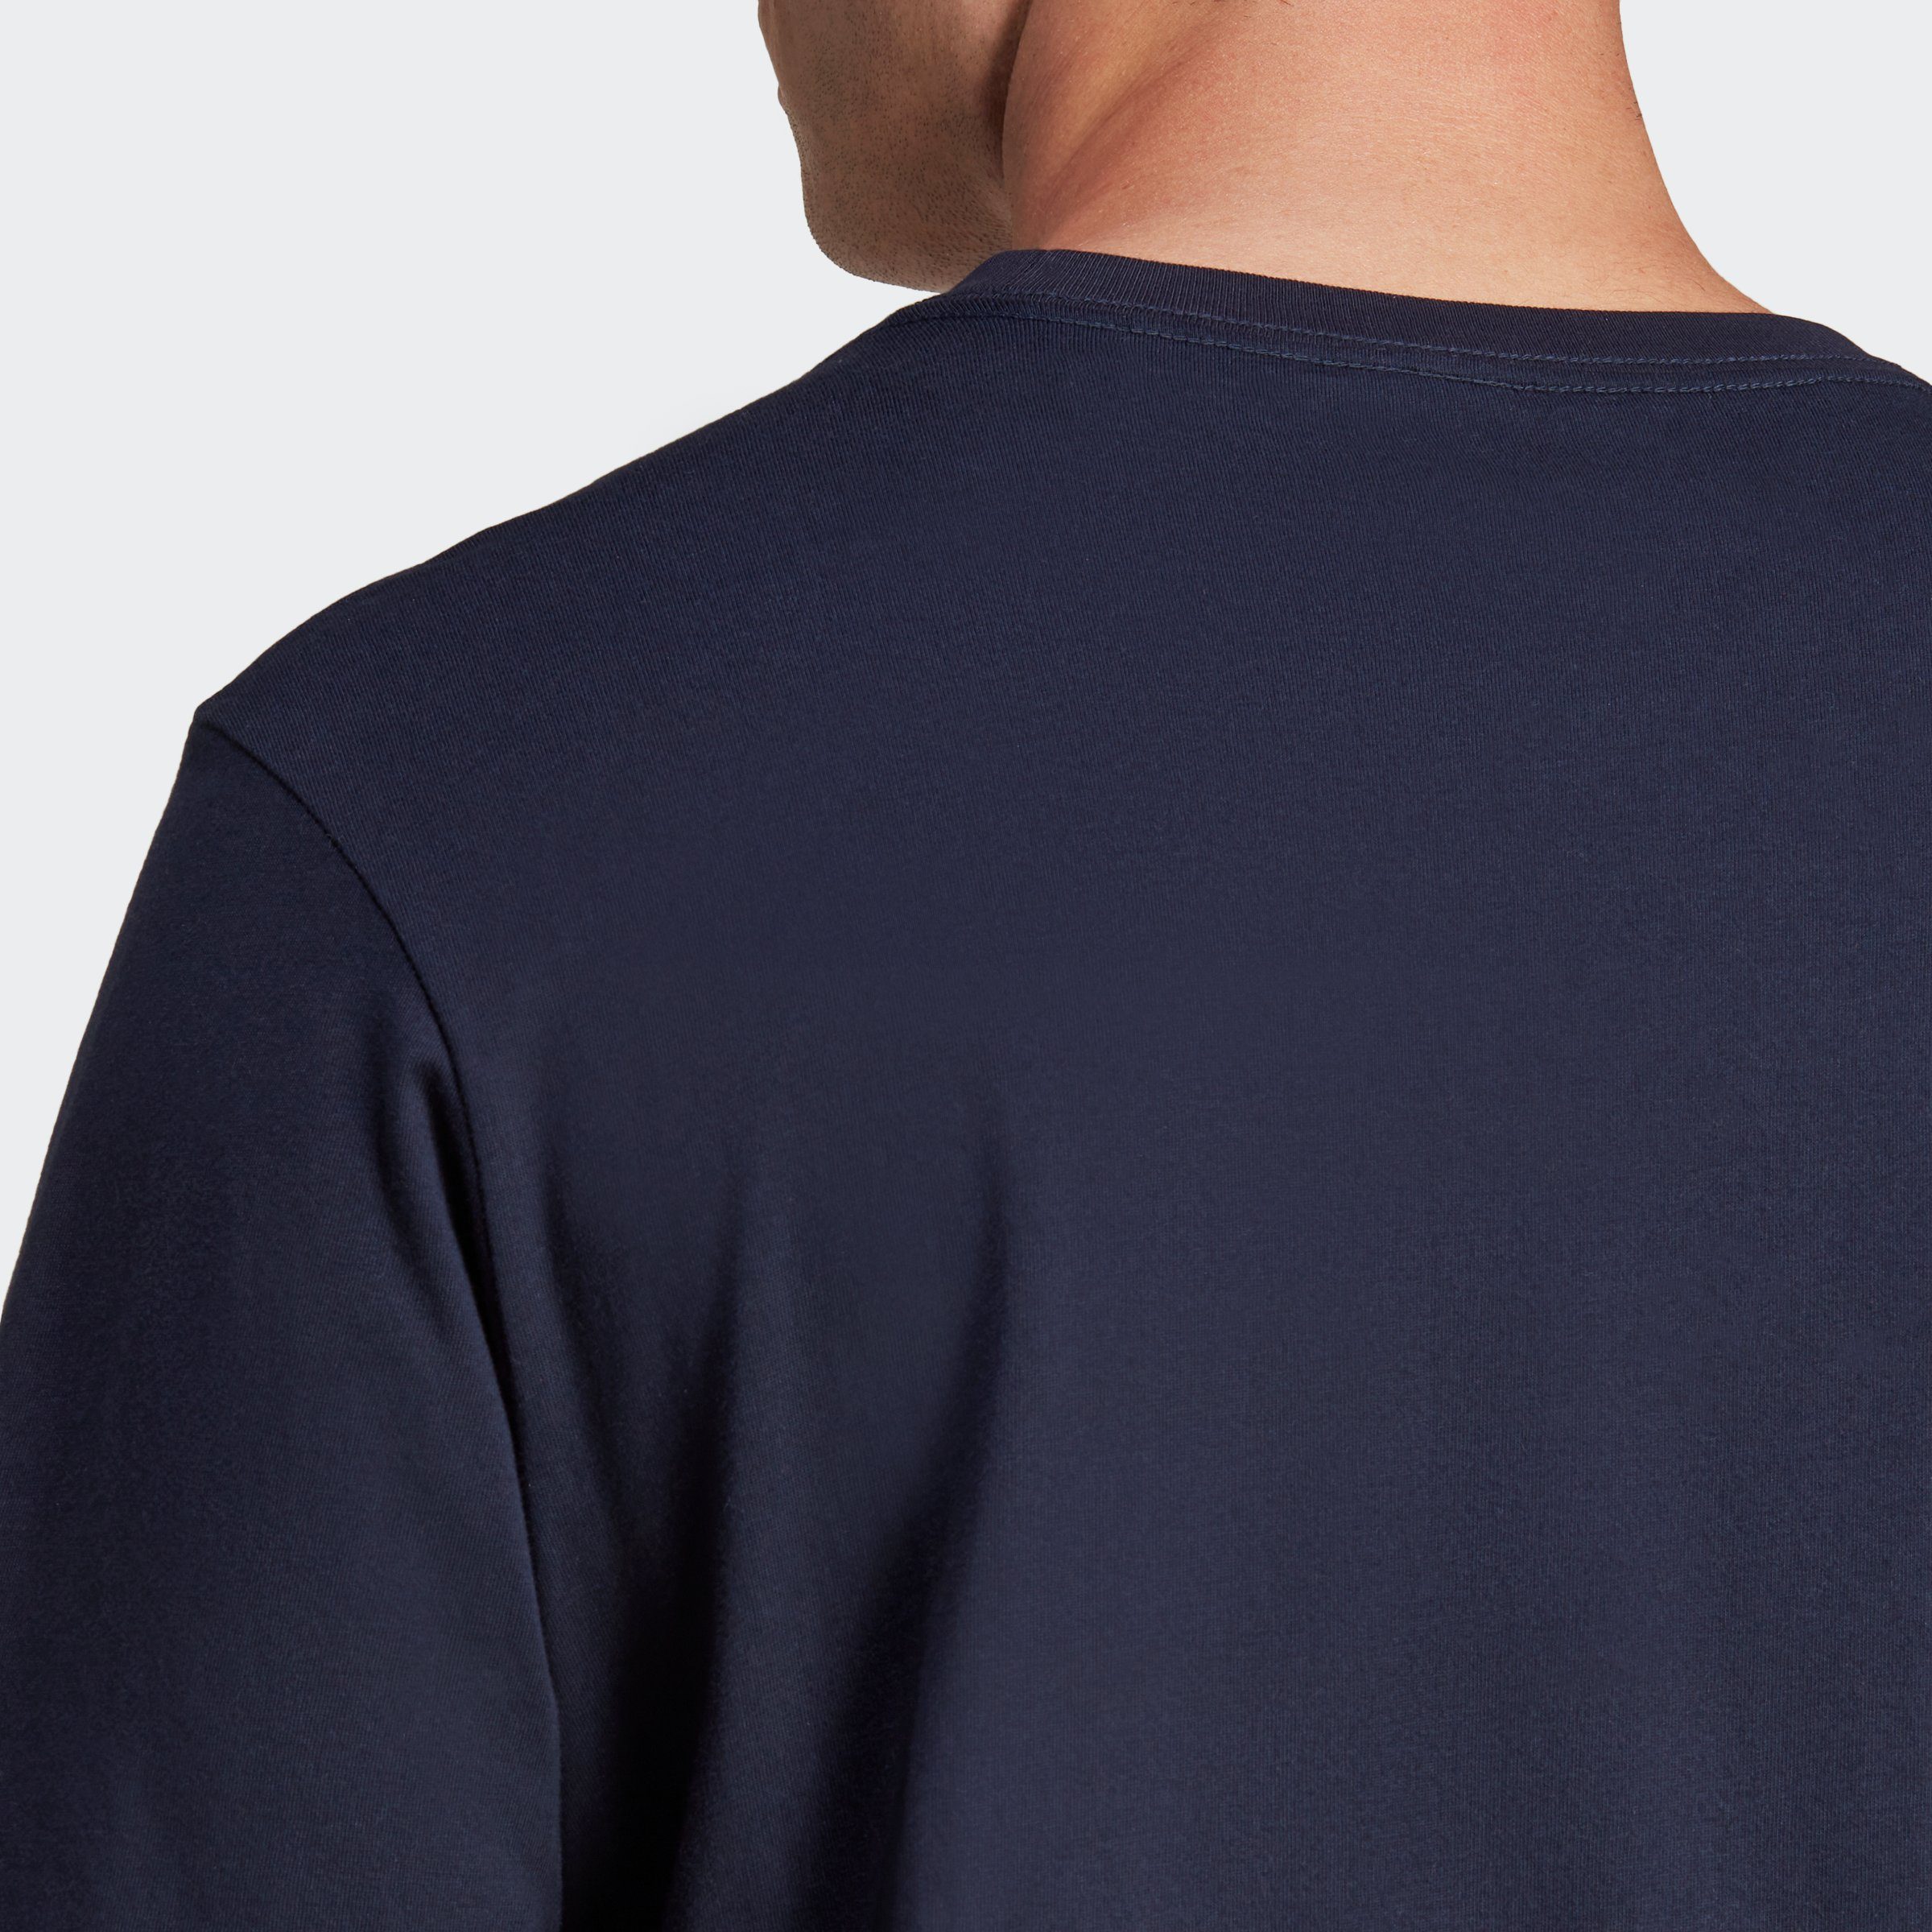 Legend LOGO ESSENTIALS SINGLE adidas T-Shirt JERSEY SMALL Ink EMBROIDERED Sportswear